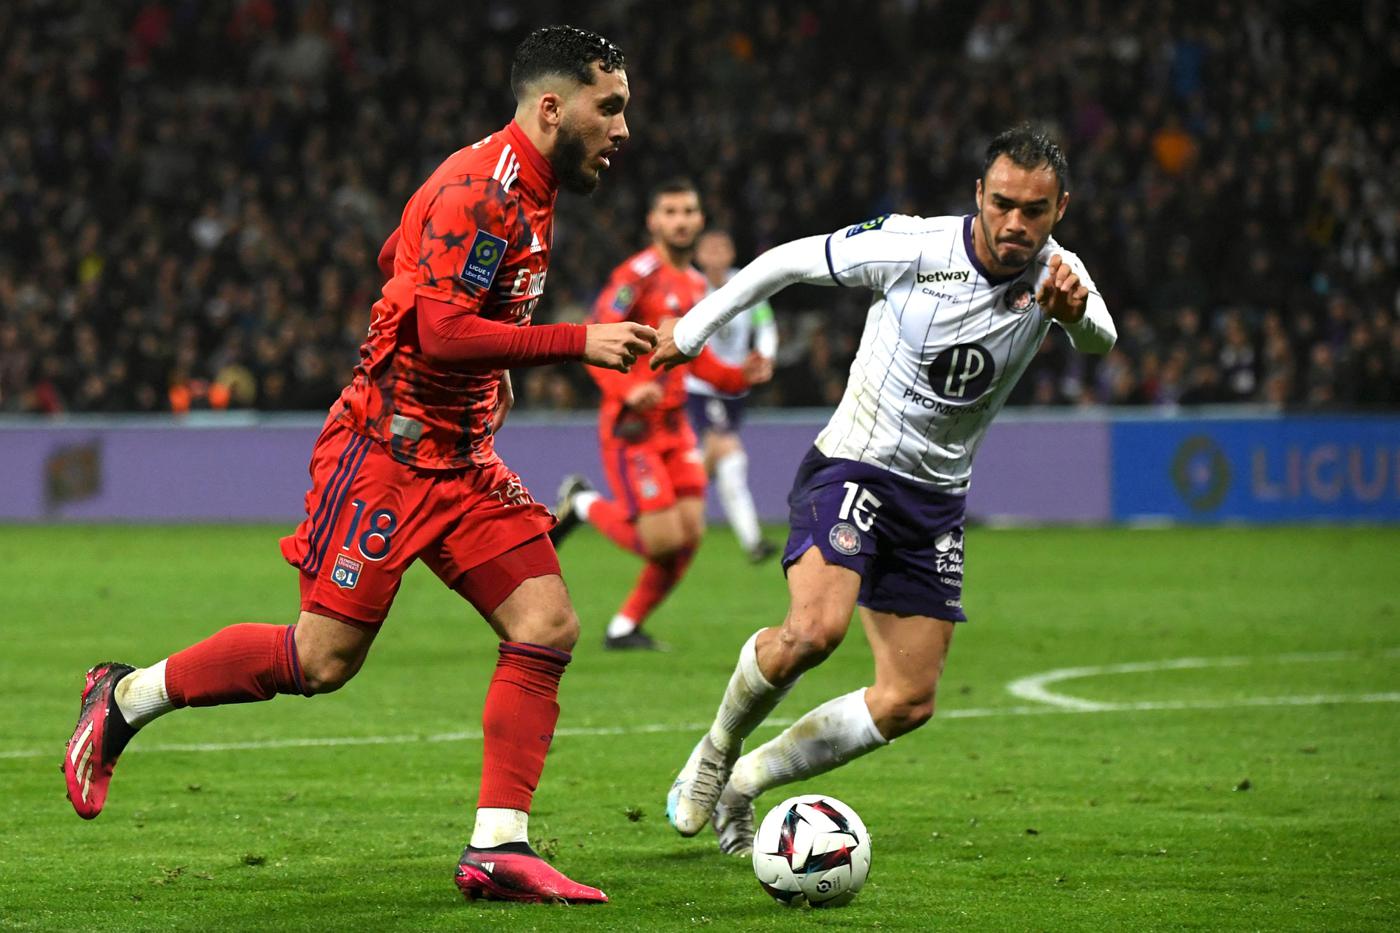 statistics Toulouse - Lyon - 1:2. French Championship, round 31. Match review,